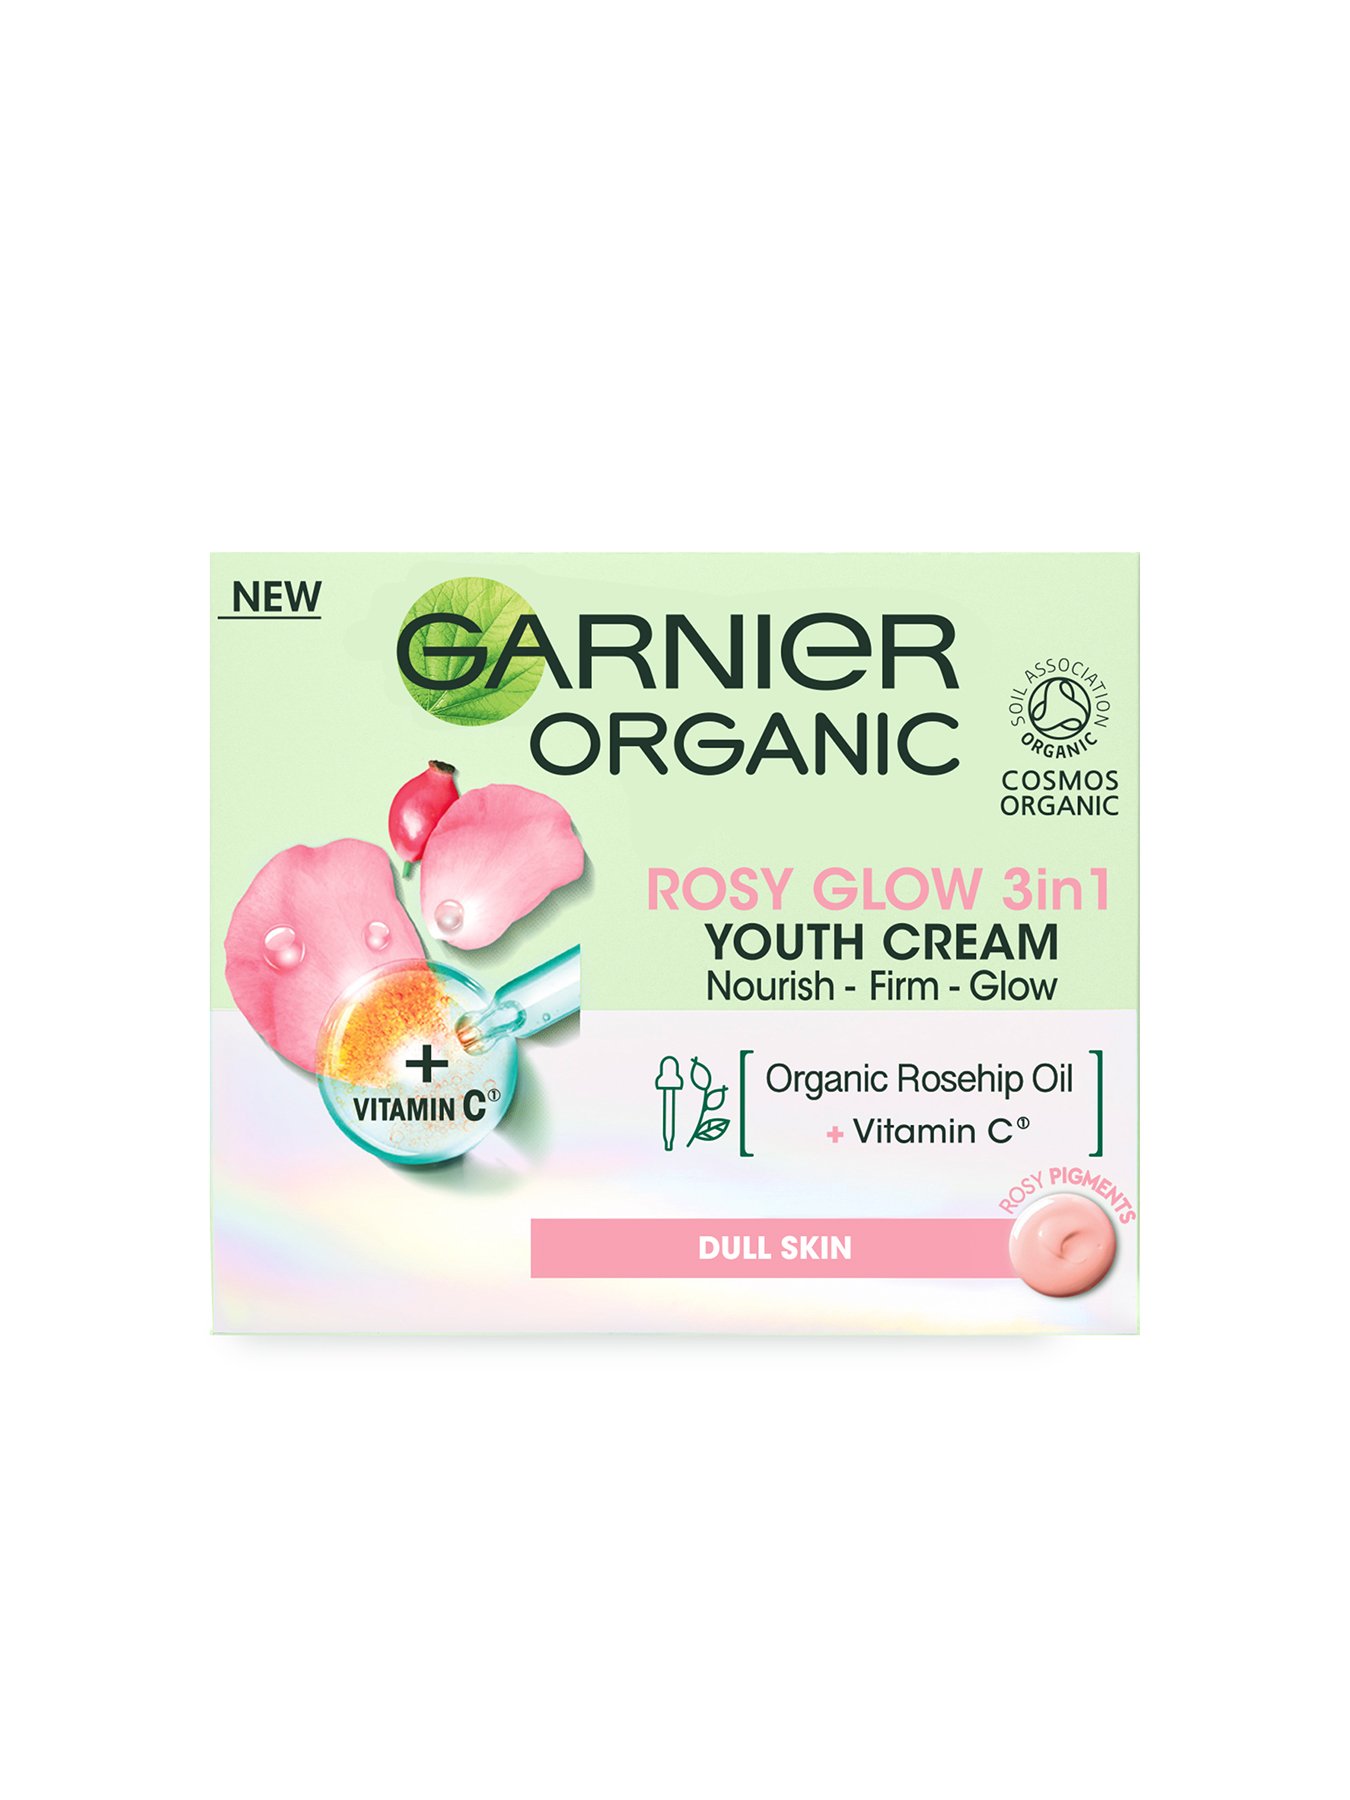 Garnier Organic Rosy Glow 3in1 Youth Cream 50ml packaging